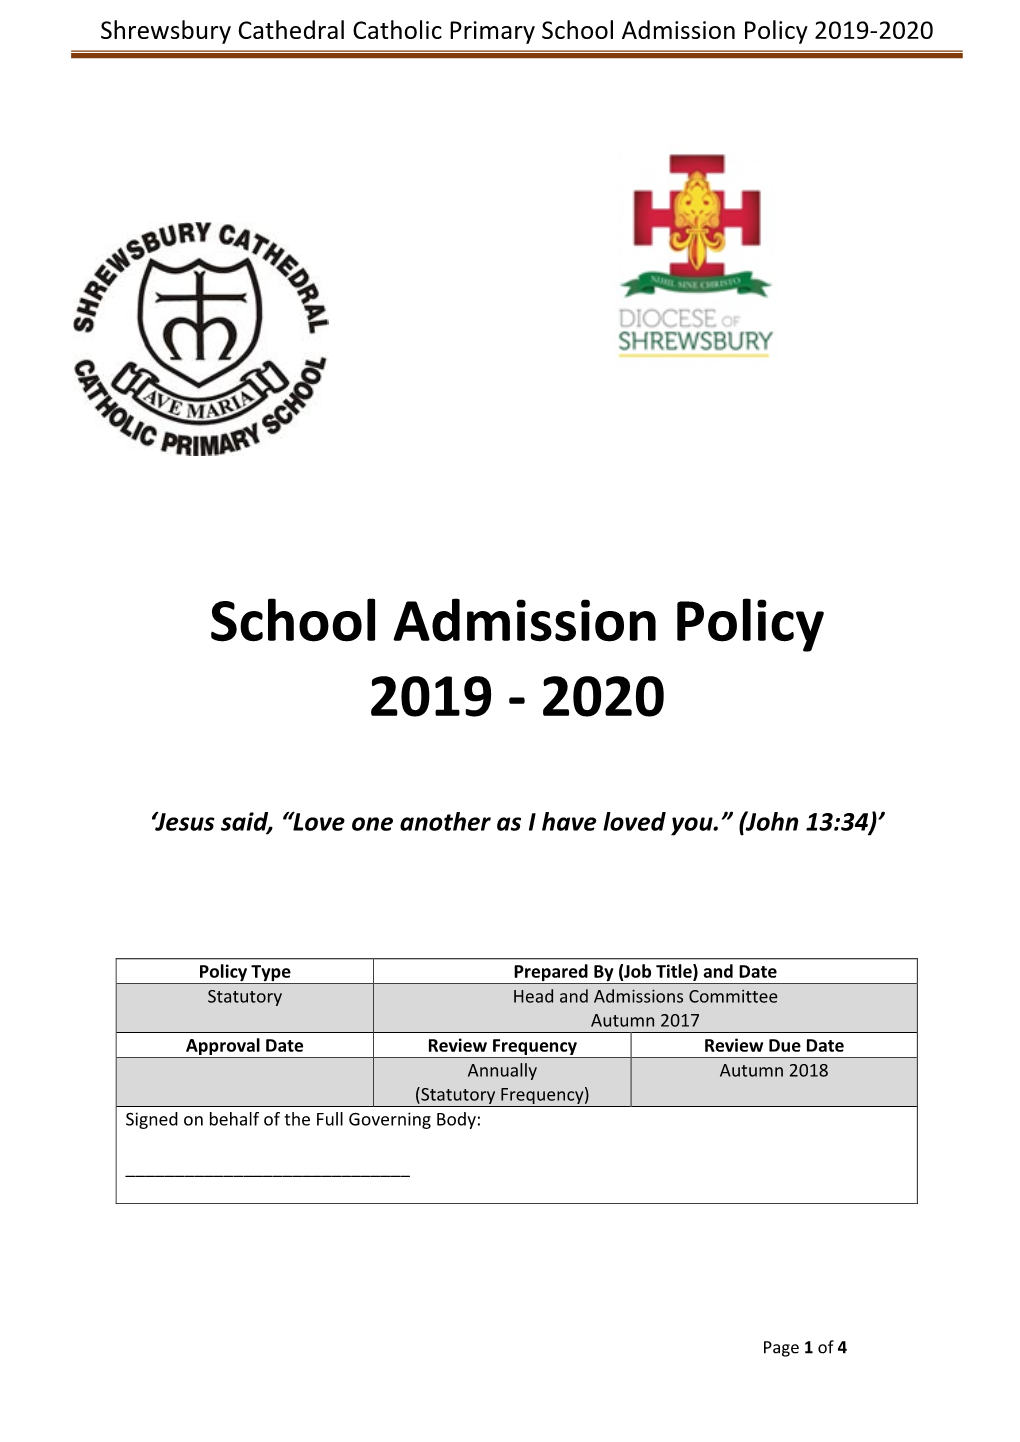 School Admission Policy 2019-2020